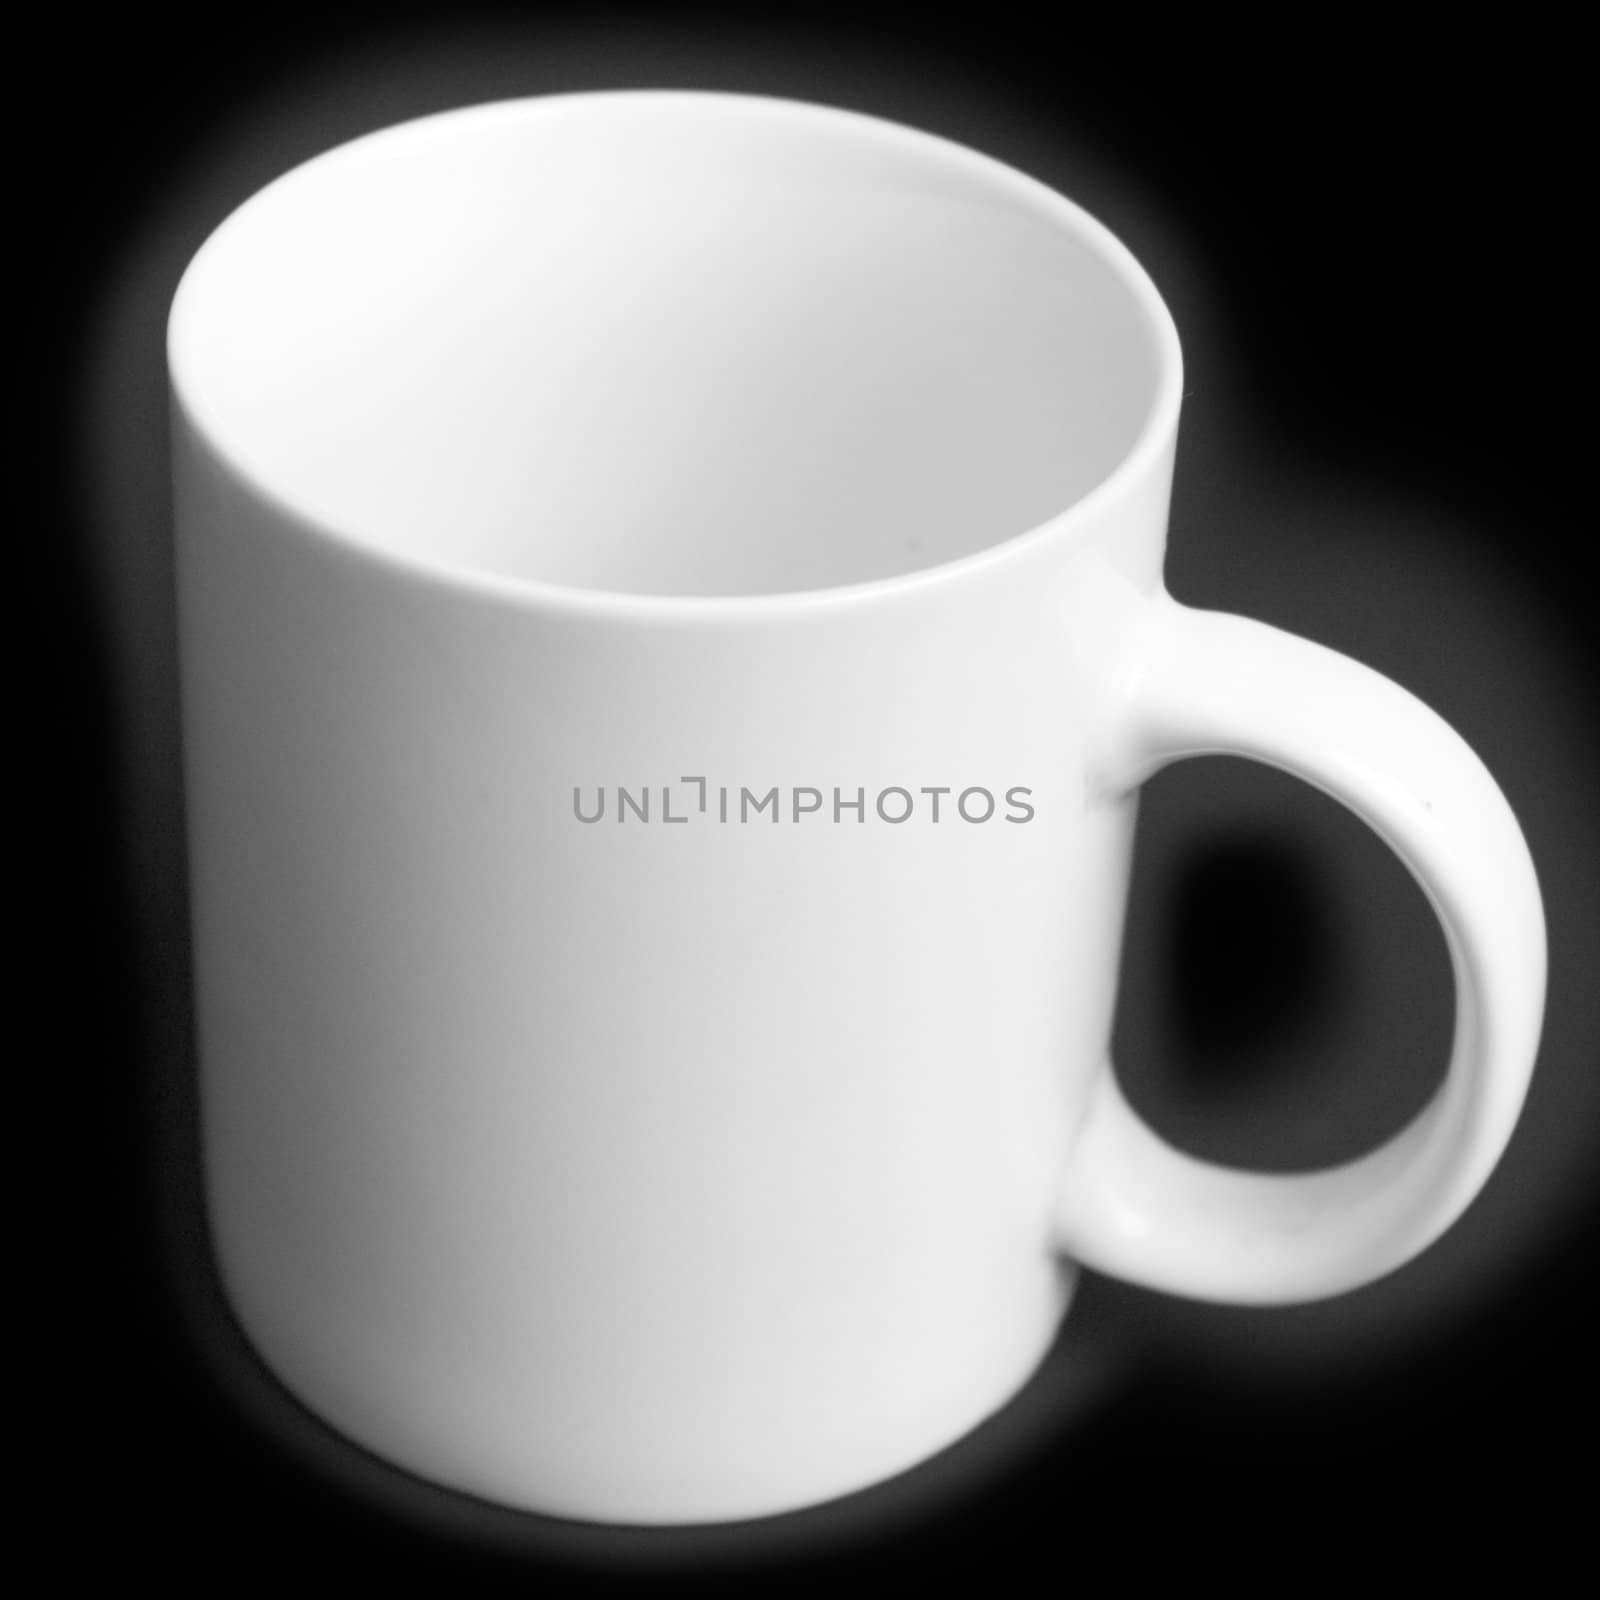 A blank empty white ceramic coffee mug